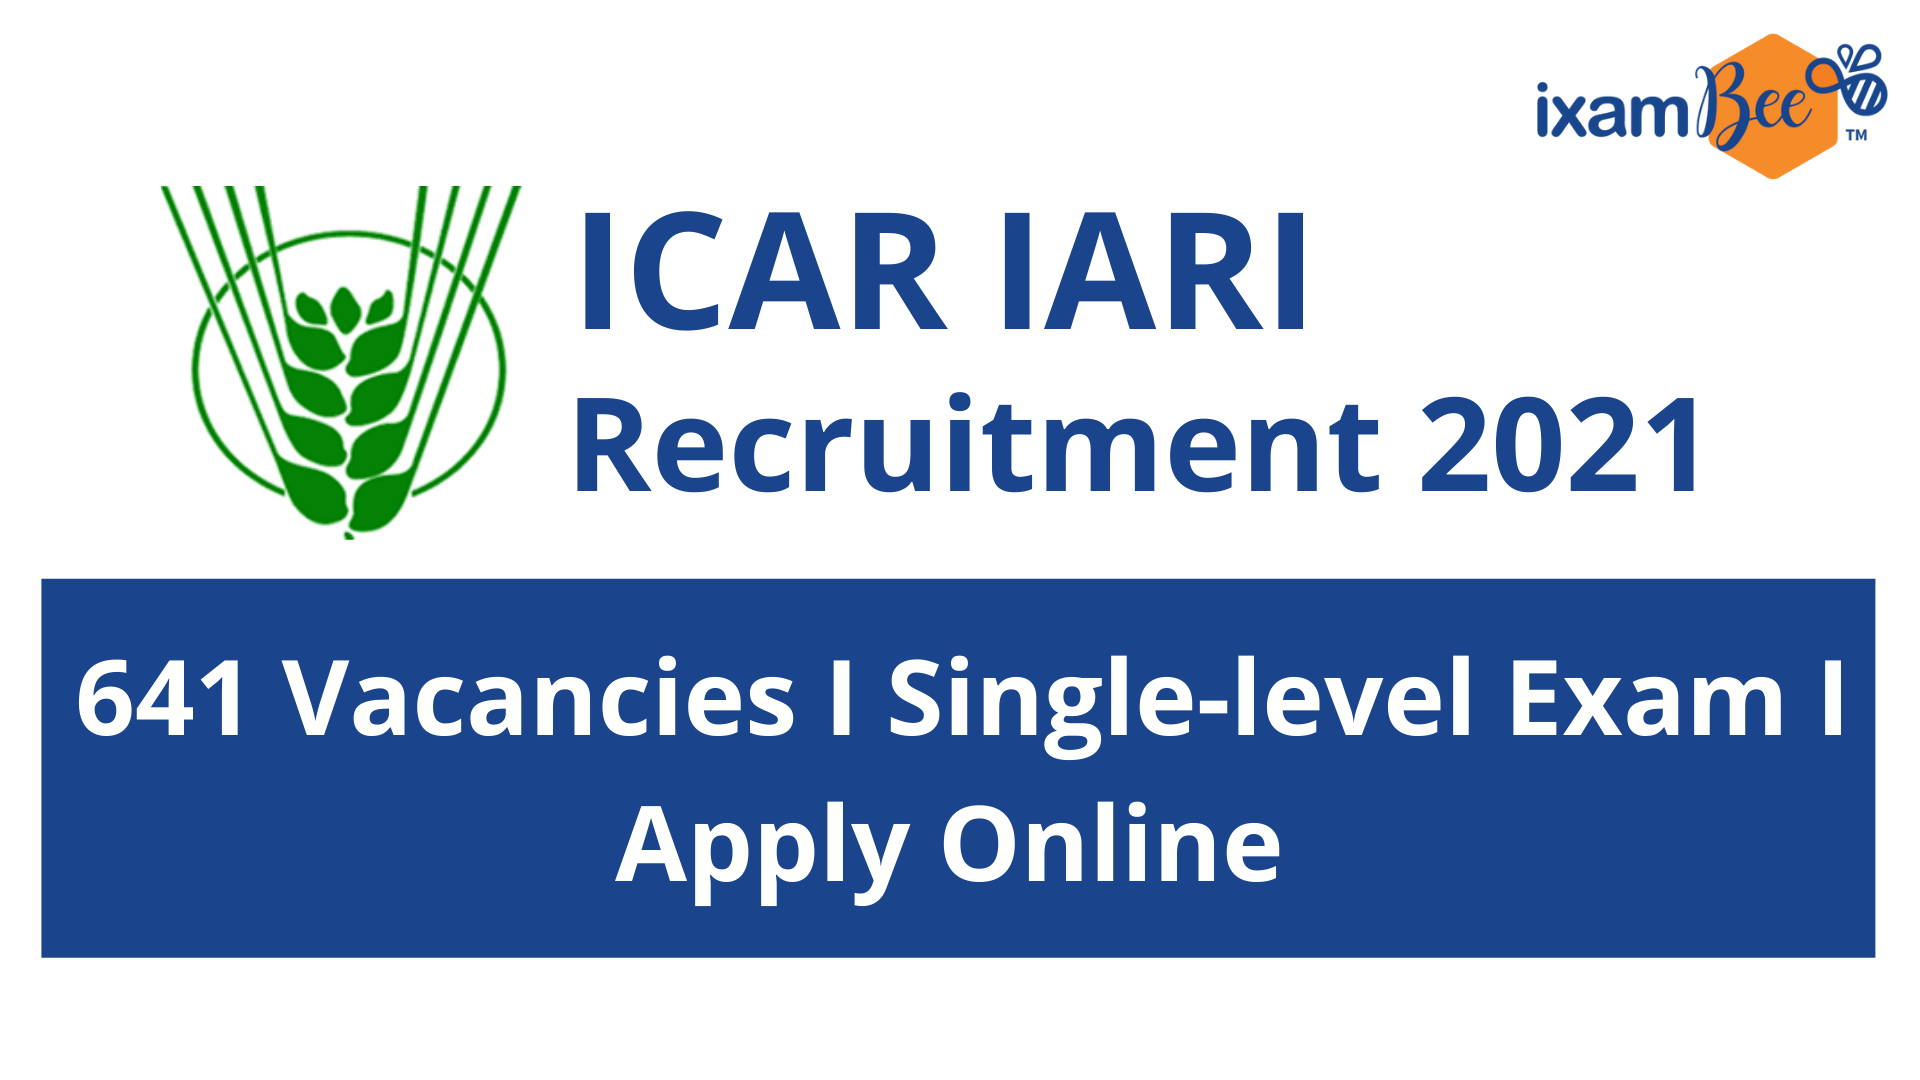 ICAR IARI Recruitment 2021